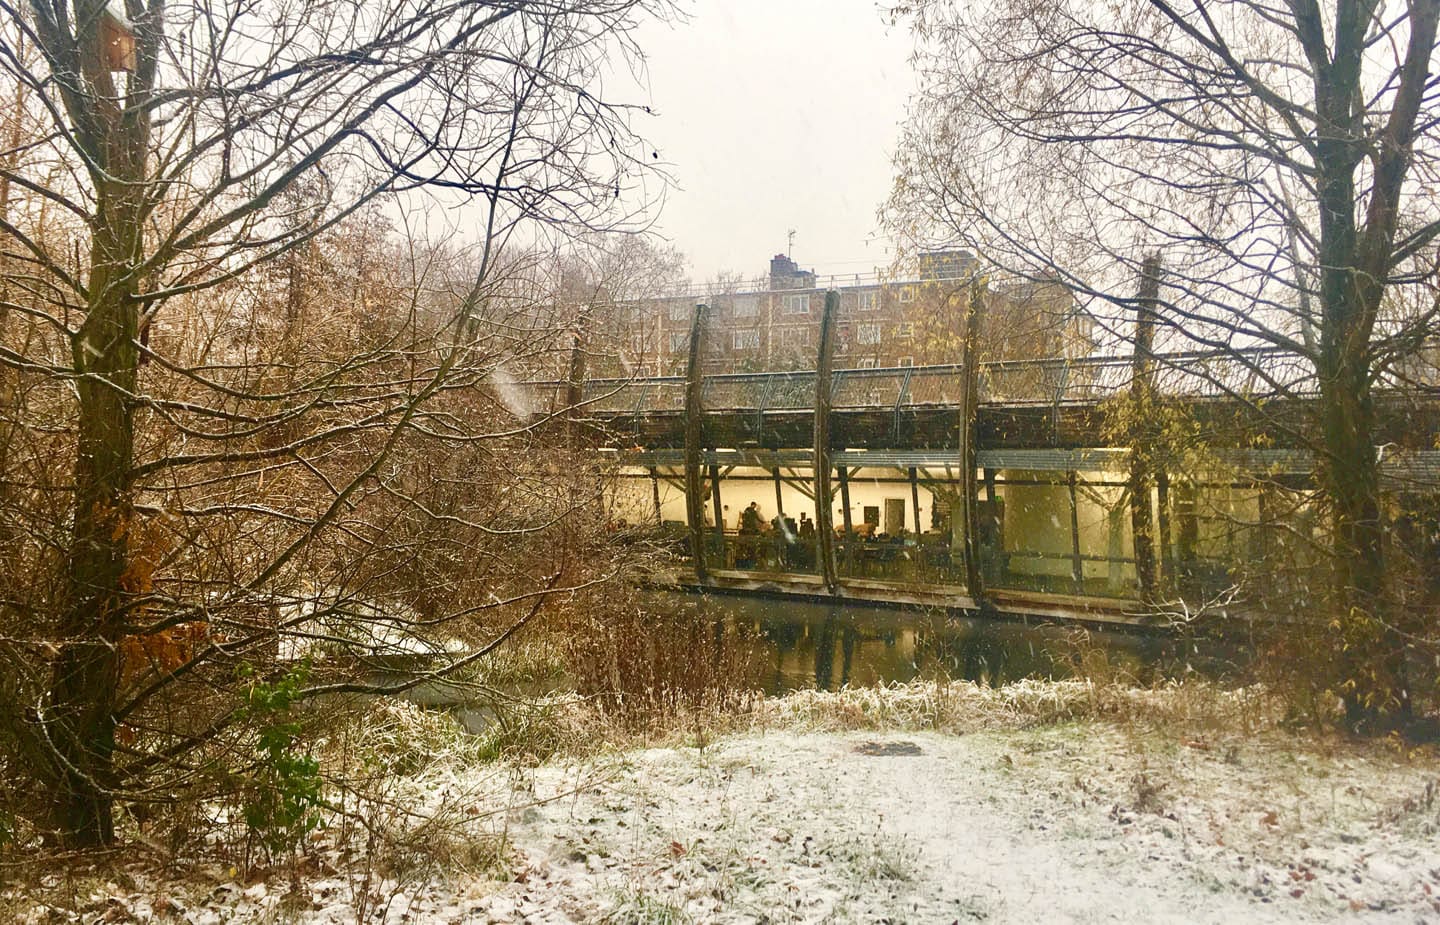 Ecology Pavilion Mile end park - in the snow